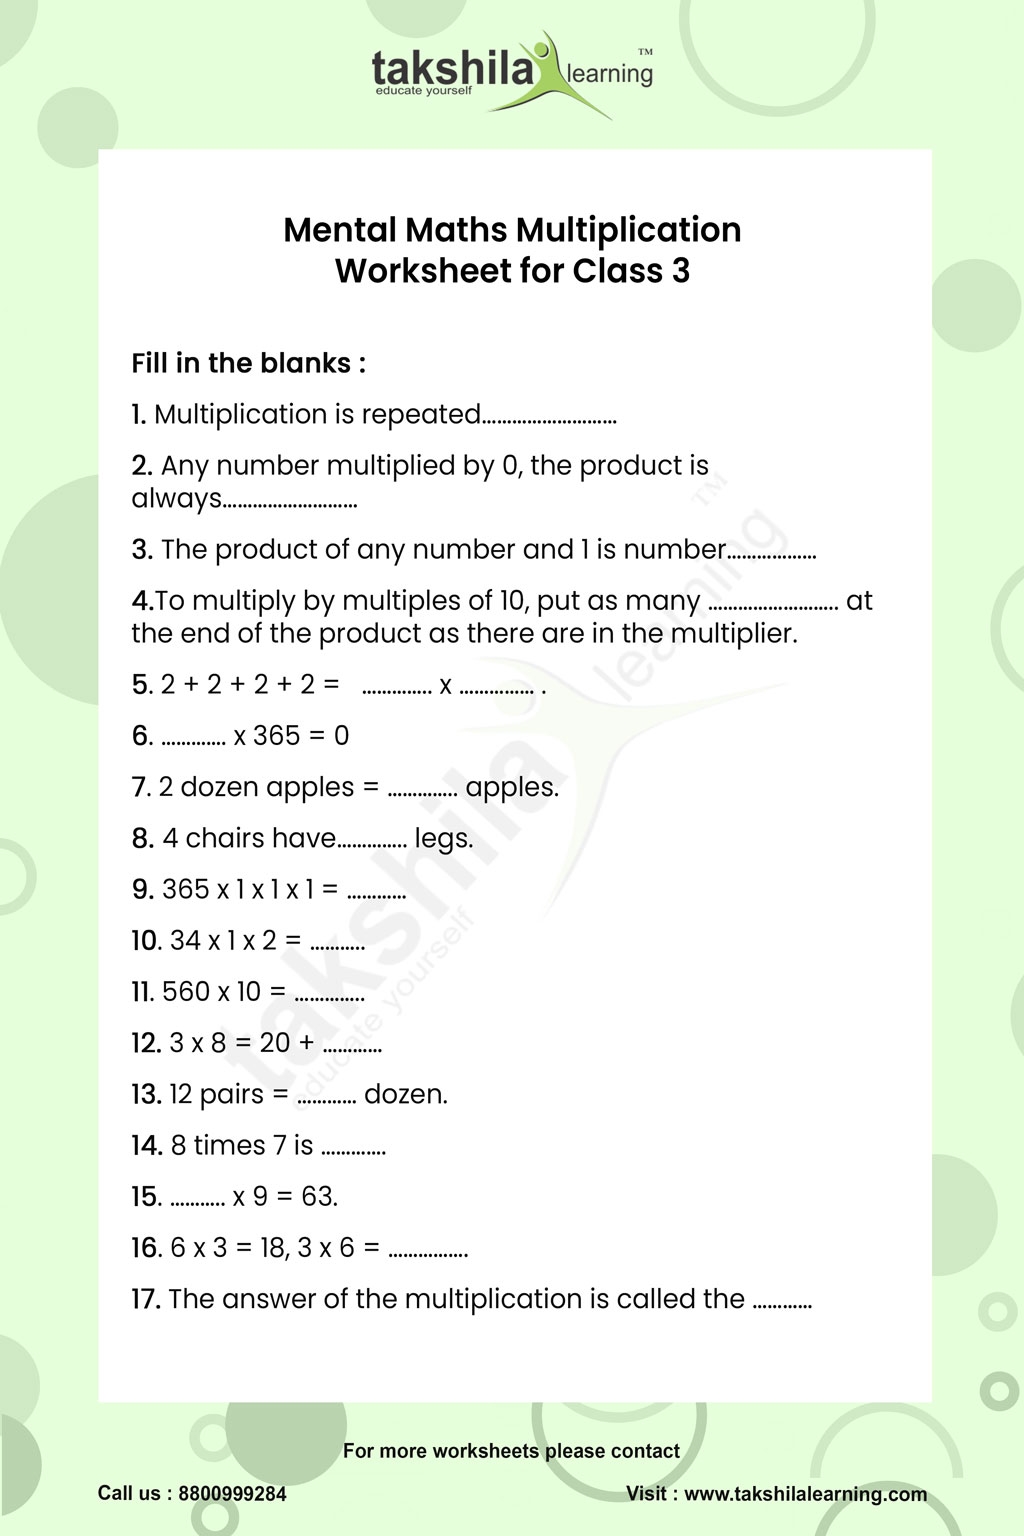 multiplication-worksheet-for-class-3-mental-maths-worksheet-for-class-3-math-worksheet-answers